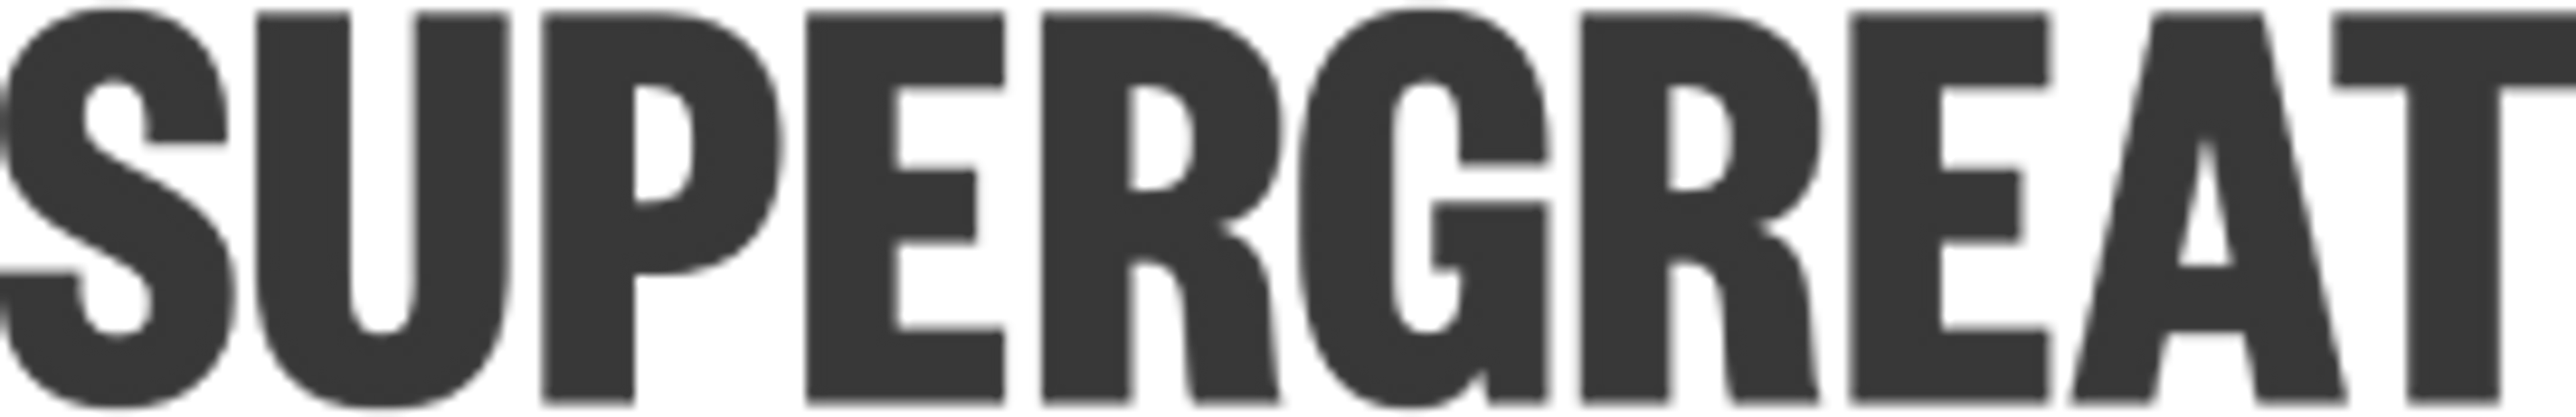 Supergreat logo